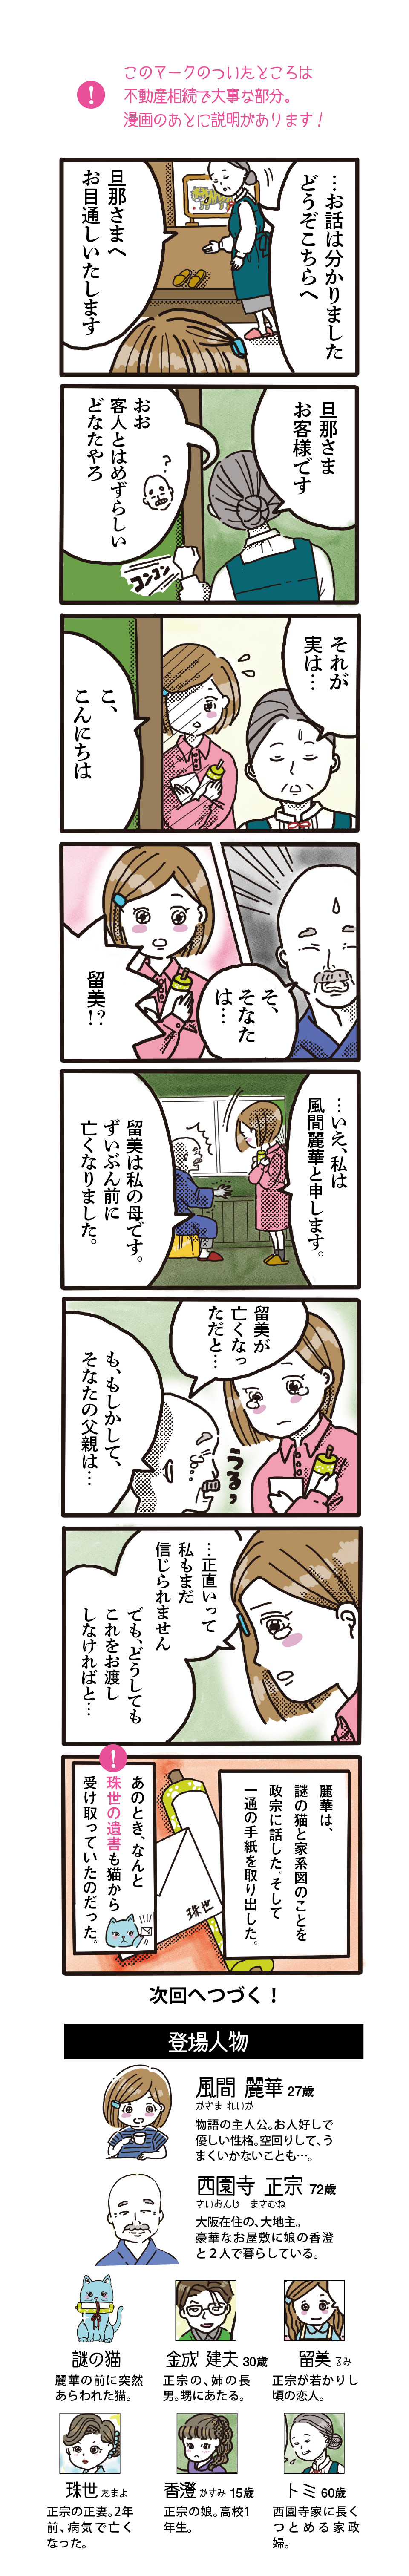 【web漫画】華麗なるSOUZOKU  #6